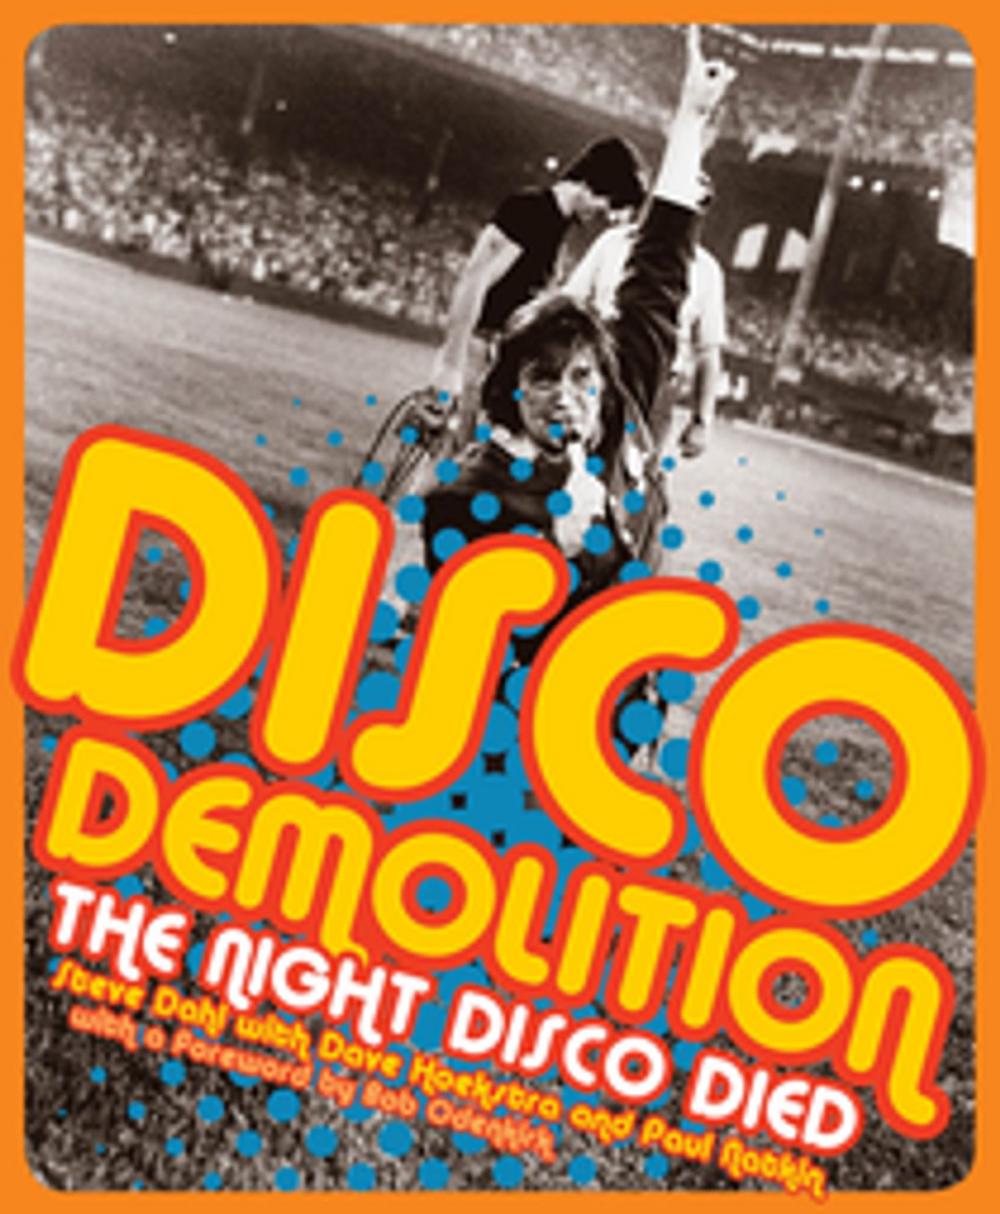 Big bigCover of Disco Demolition